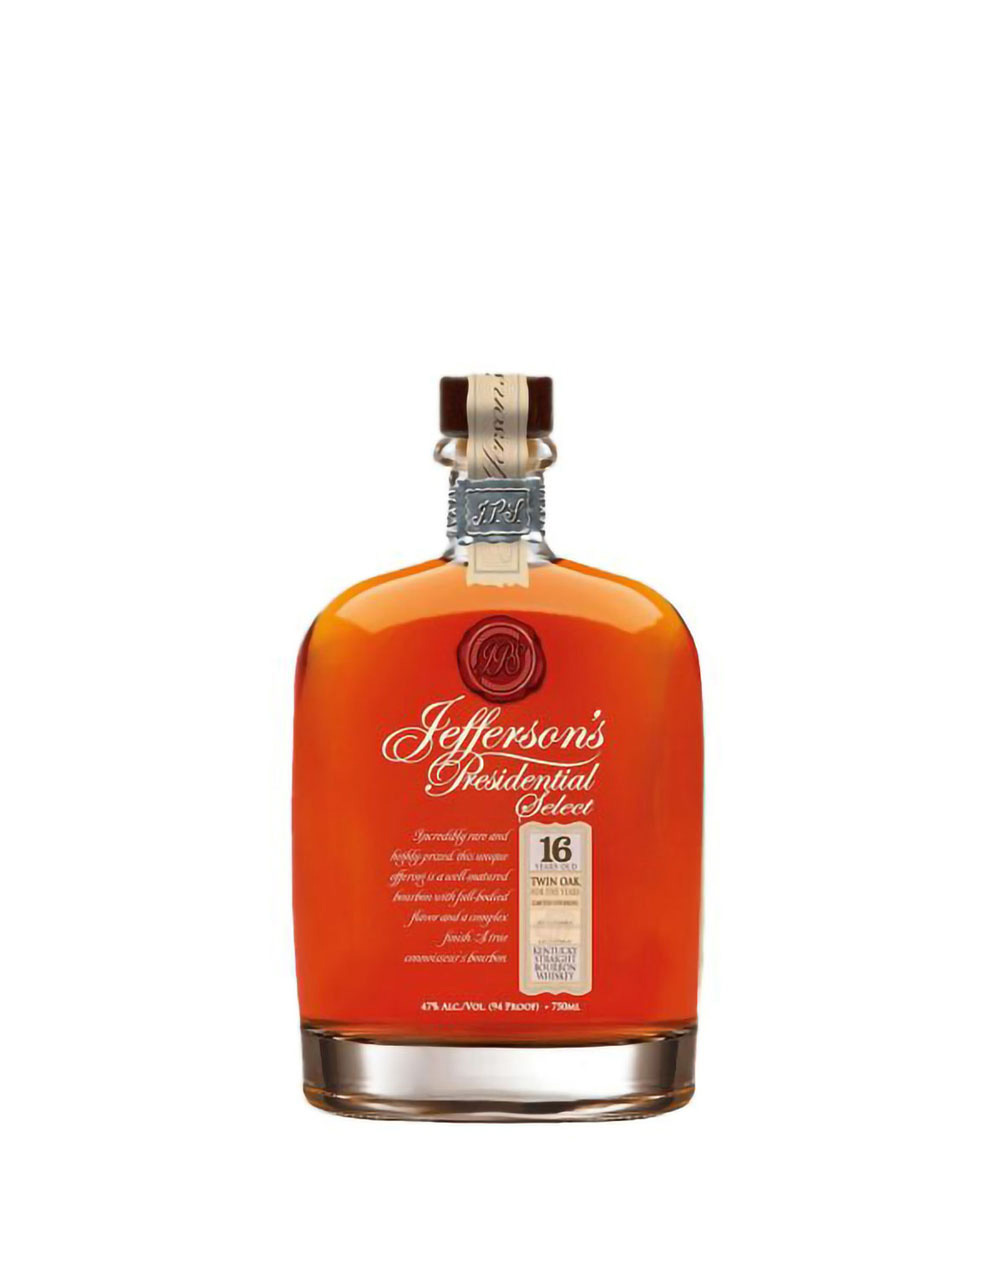 Jefferson's Presidential Select 16 Year Old Twin Oak Bourbon Whiskey